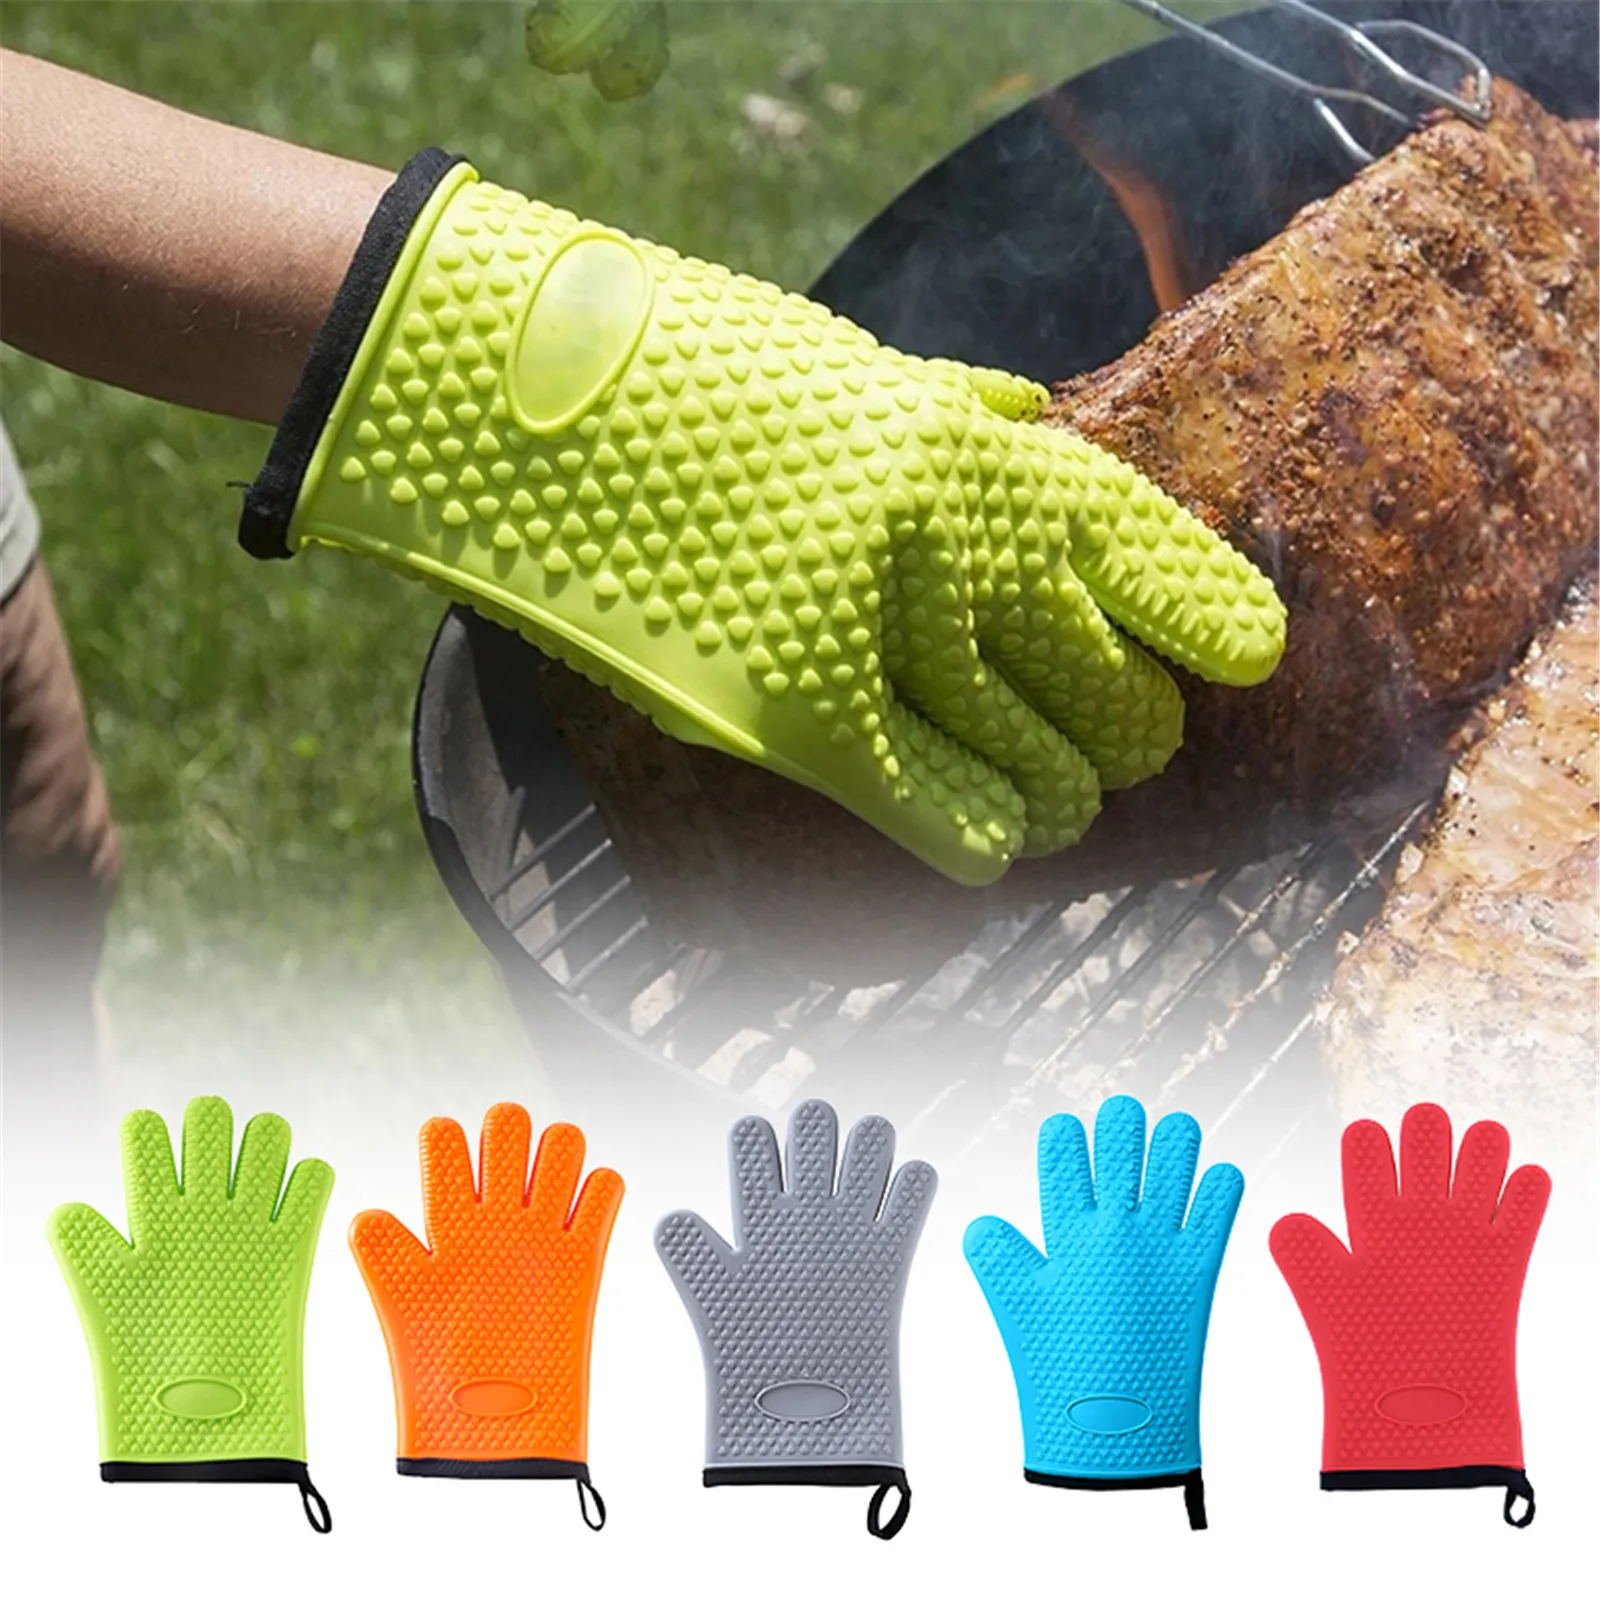 

VOGVIGO Silicone Glove With Lanyard Kitchen Grilling Gloves Oven Mitt Heat Resistant Non-slip Cooking BBQ Grill Baking Glove